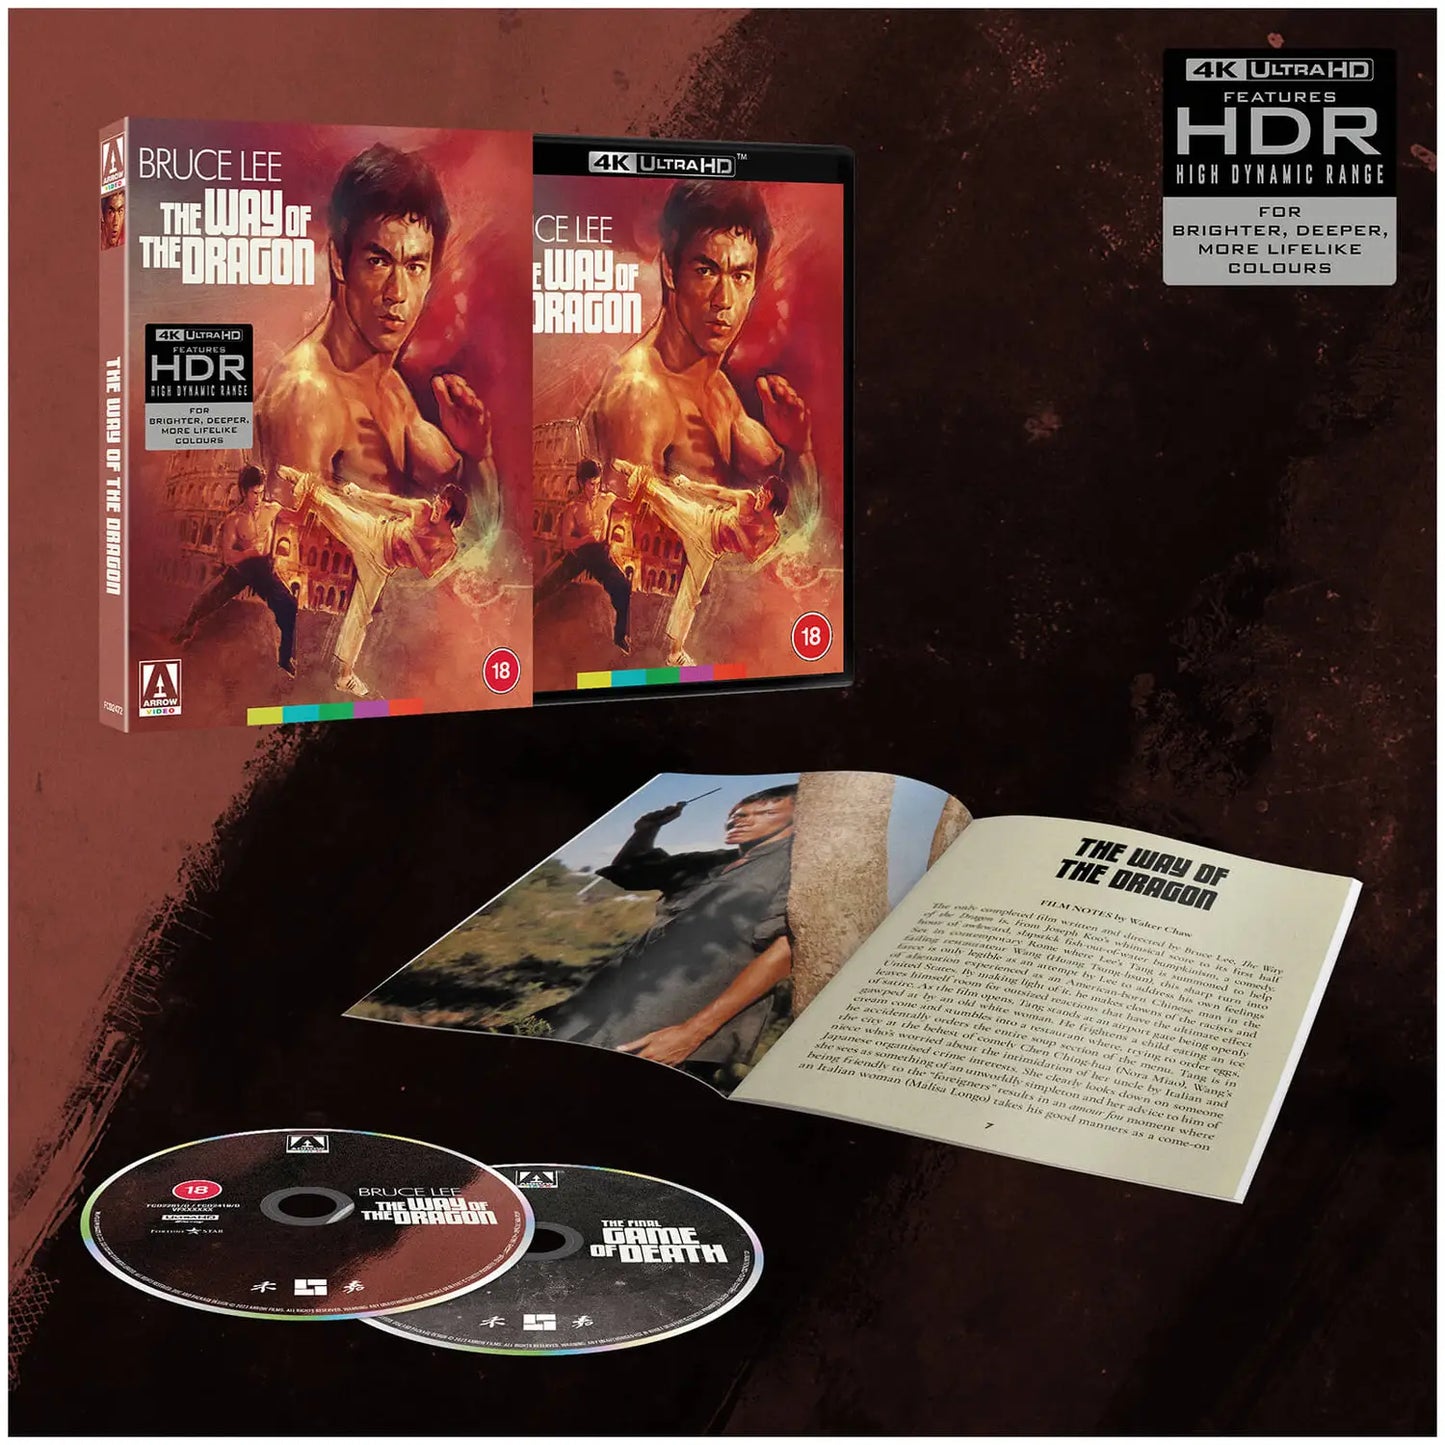 Red Dragon 4K Blu-ray (4K Ultra HD + Blu-ray)